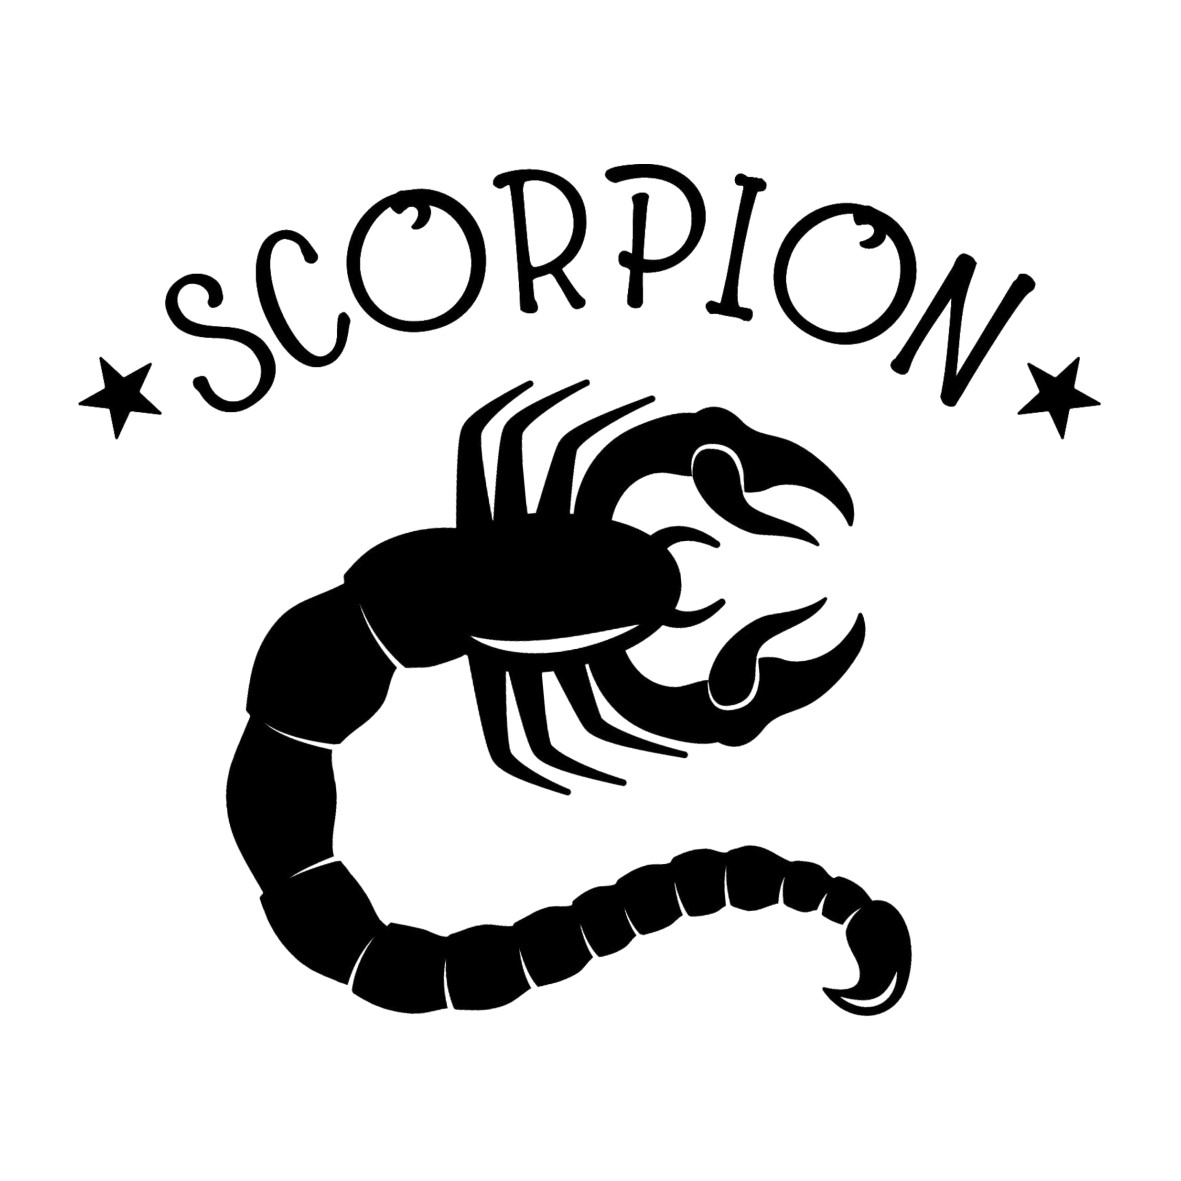 astro scorpion motif thermocollant